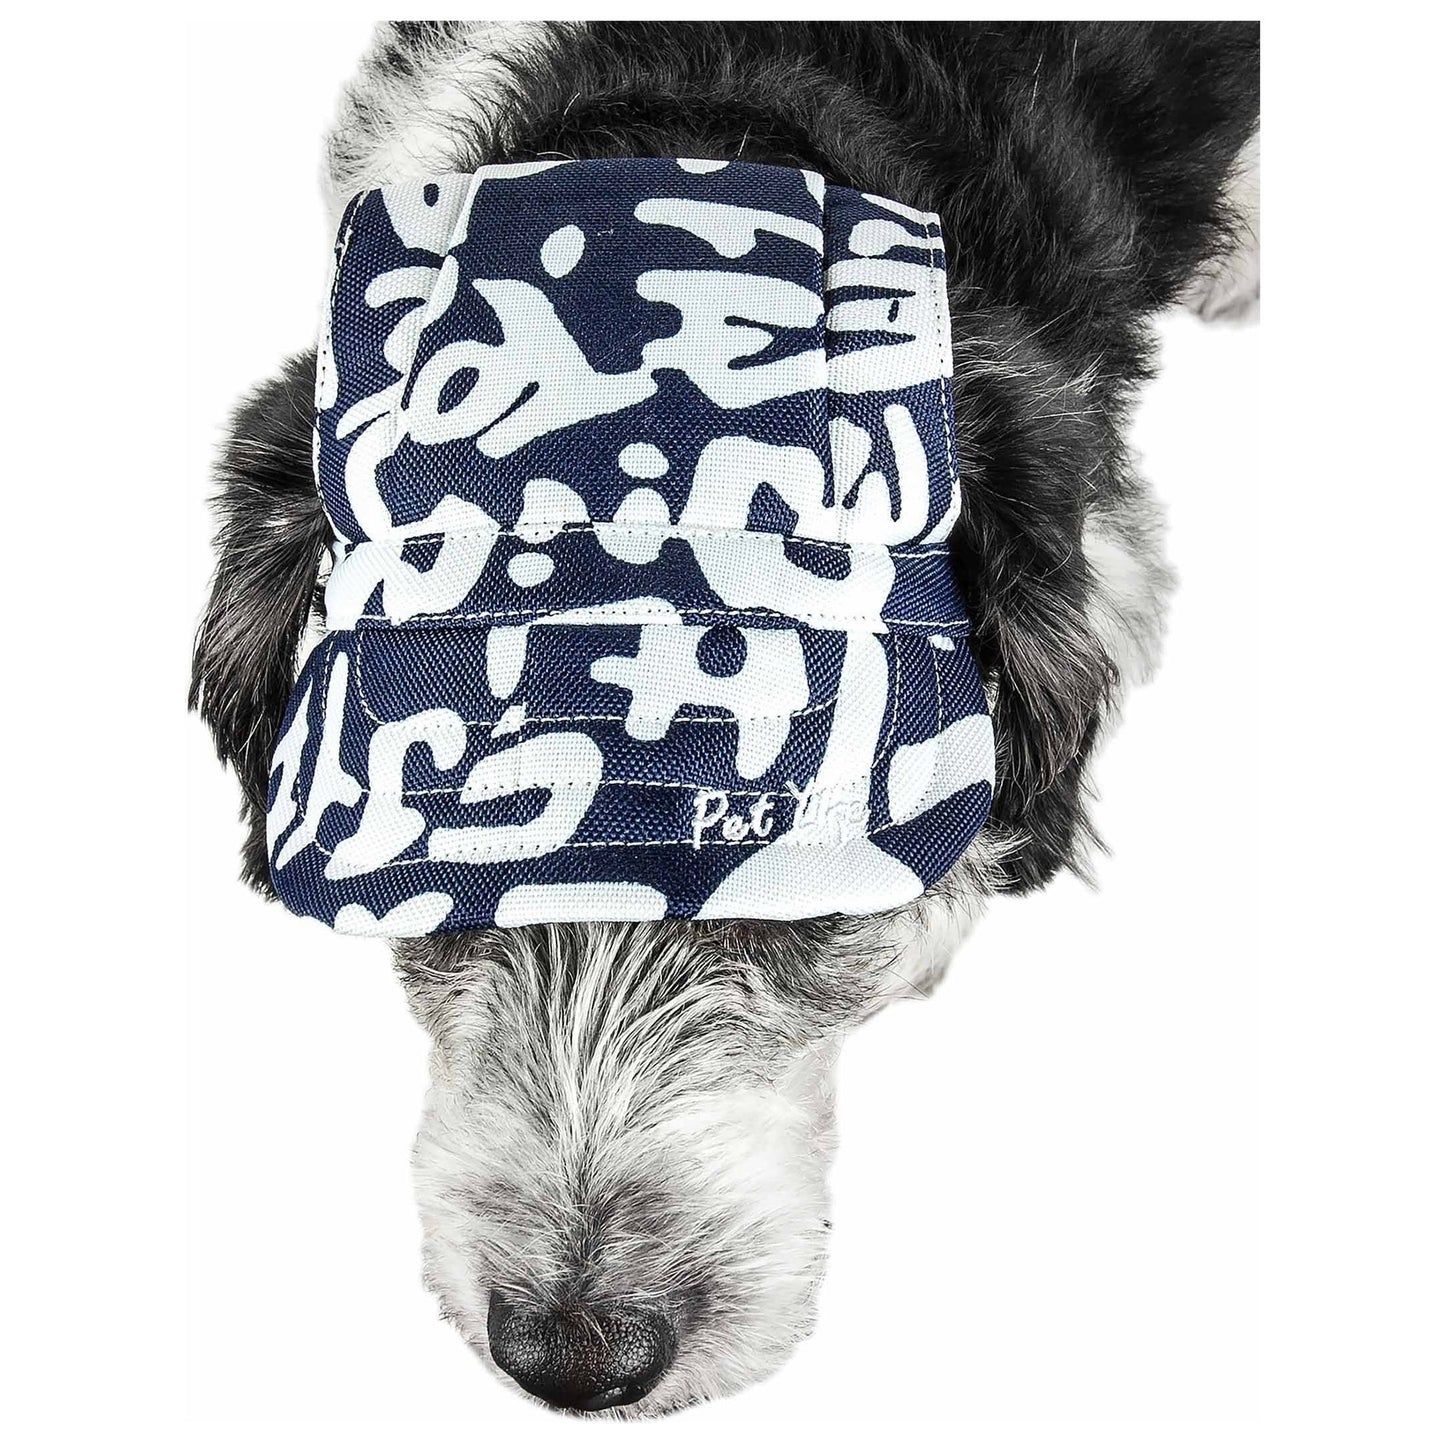 Pet Life  'bone Cappa' Graffiti Sculptured Uv Protectant Adjustable Fashion Dog Hat Cap - Medium